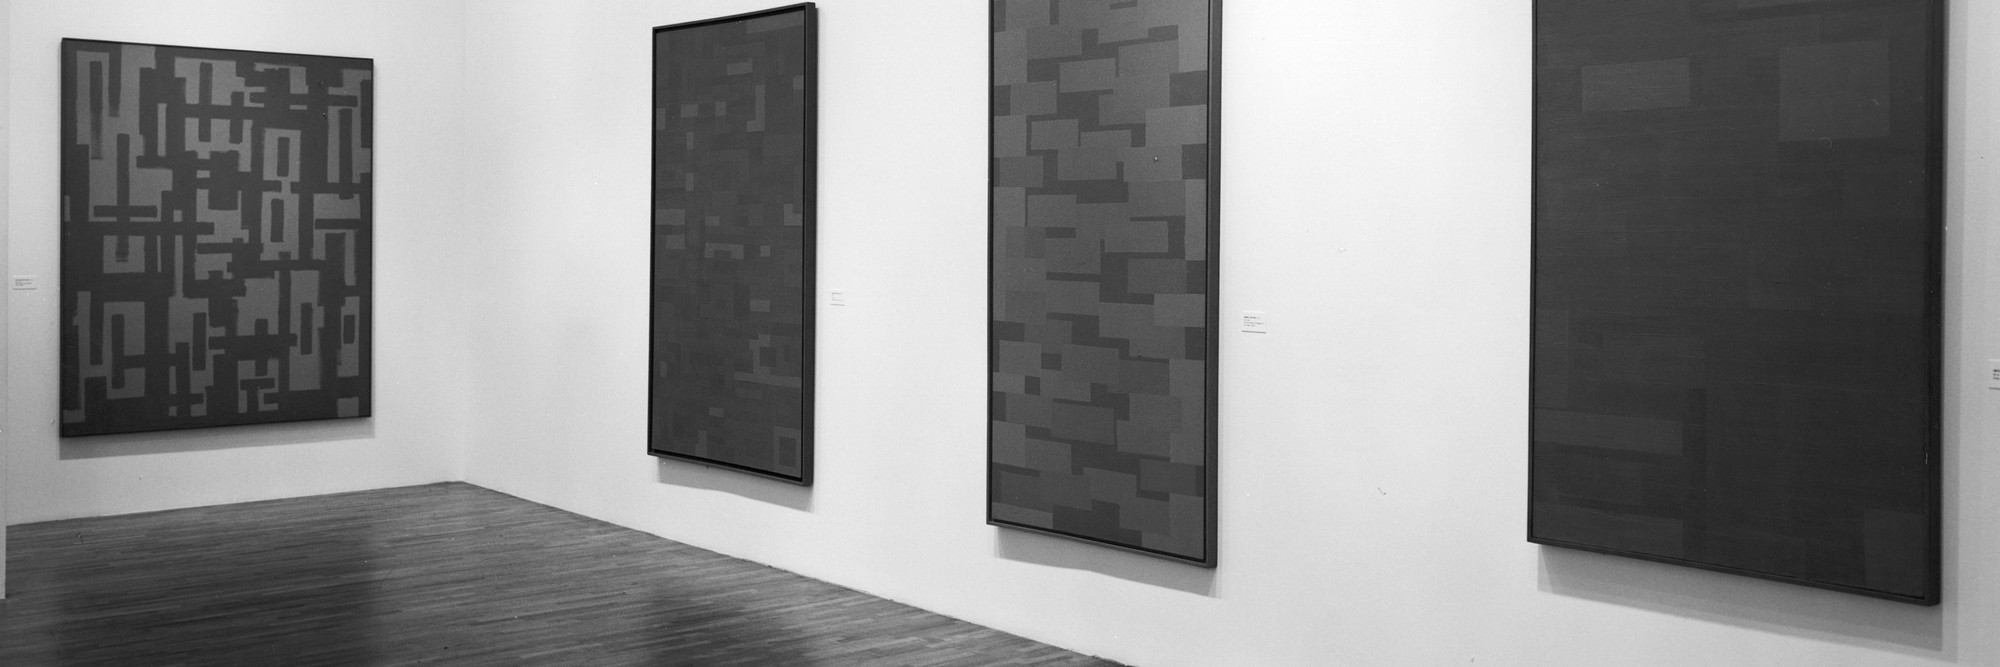 Installation view of Ad Reinhardt. at The Museum of Modern Art, New York. Photo: Mali Olatunji